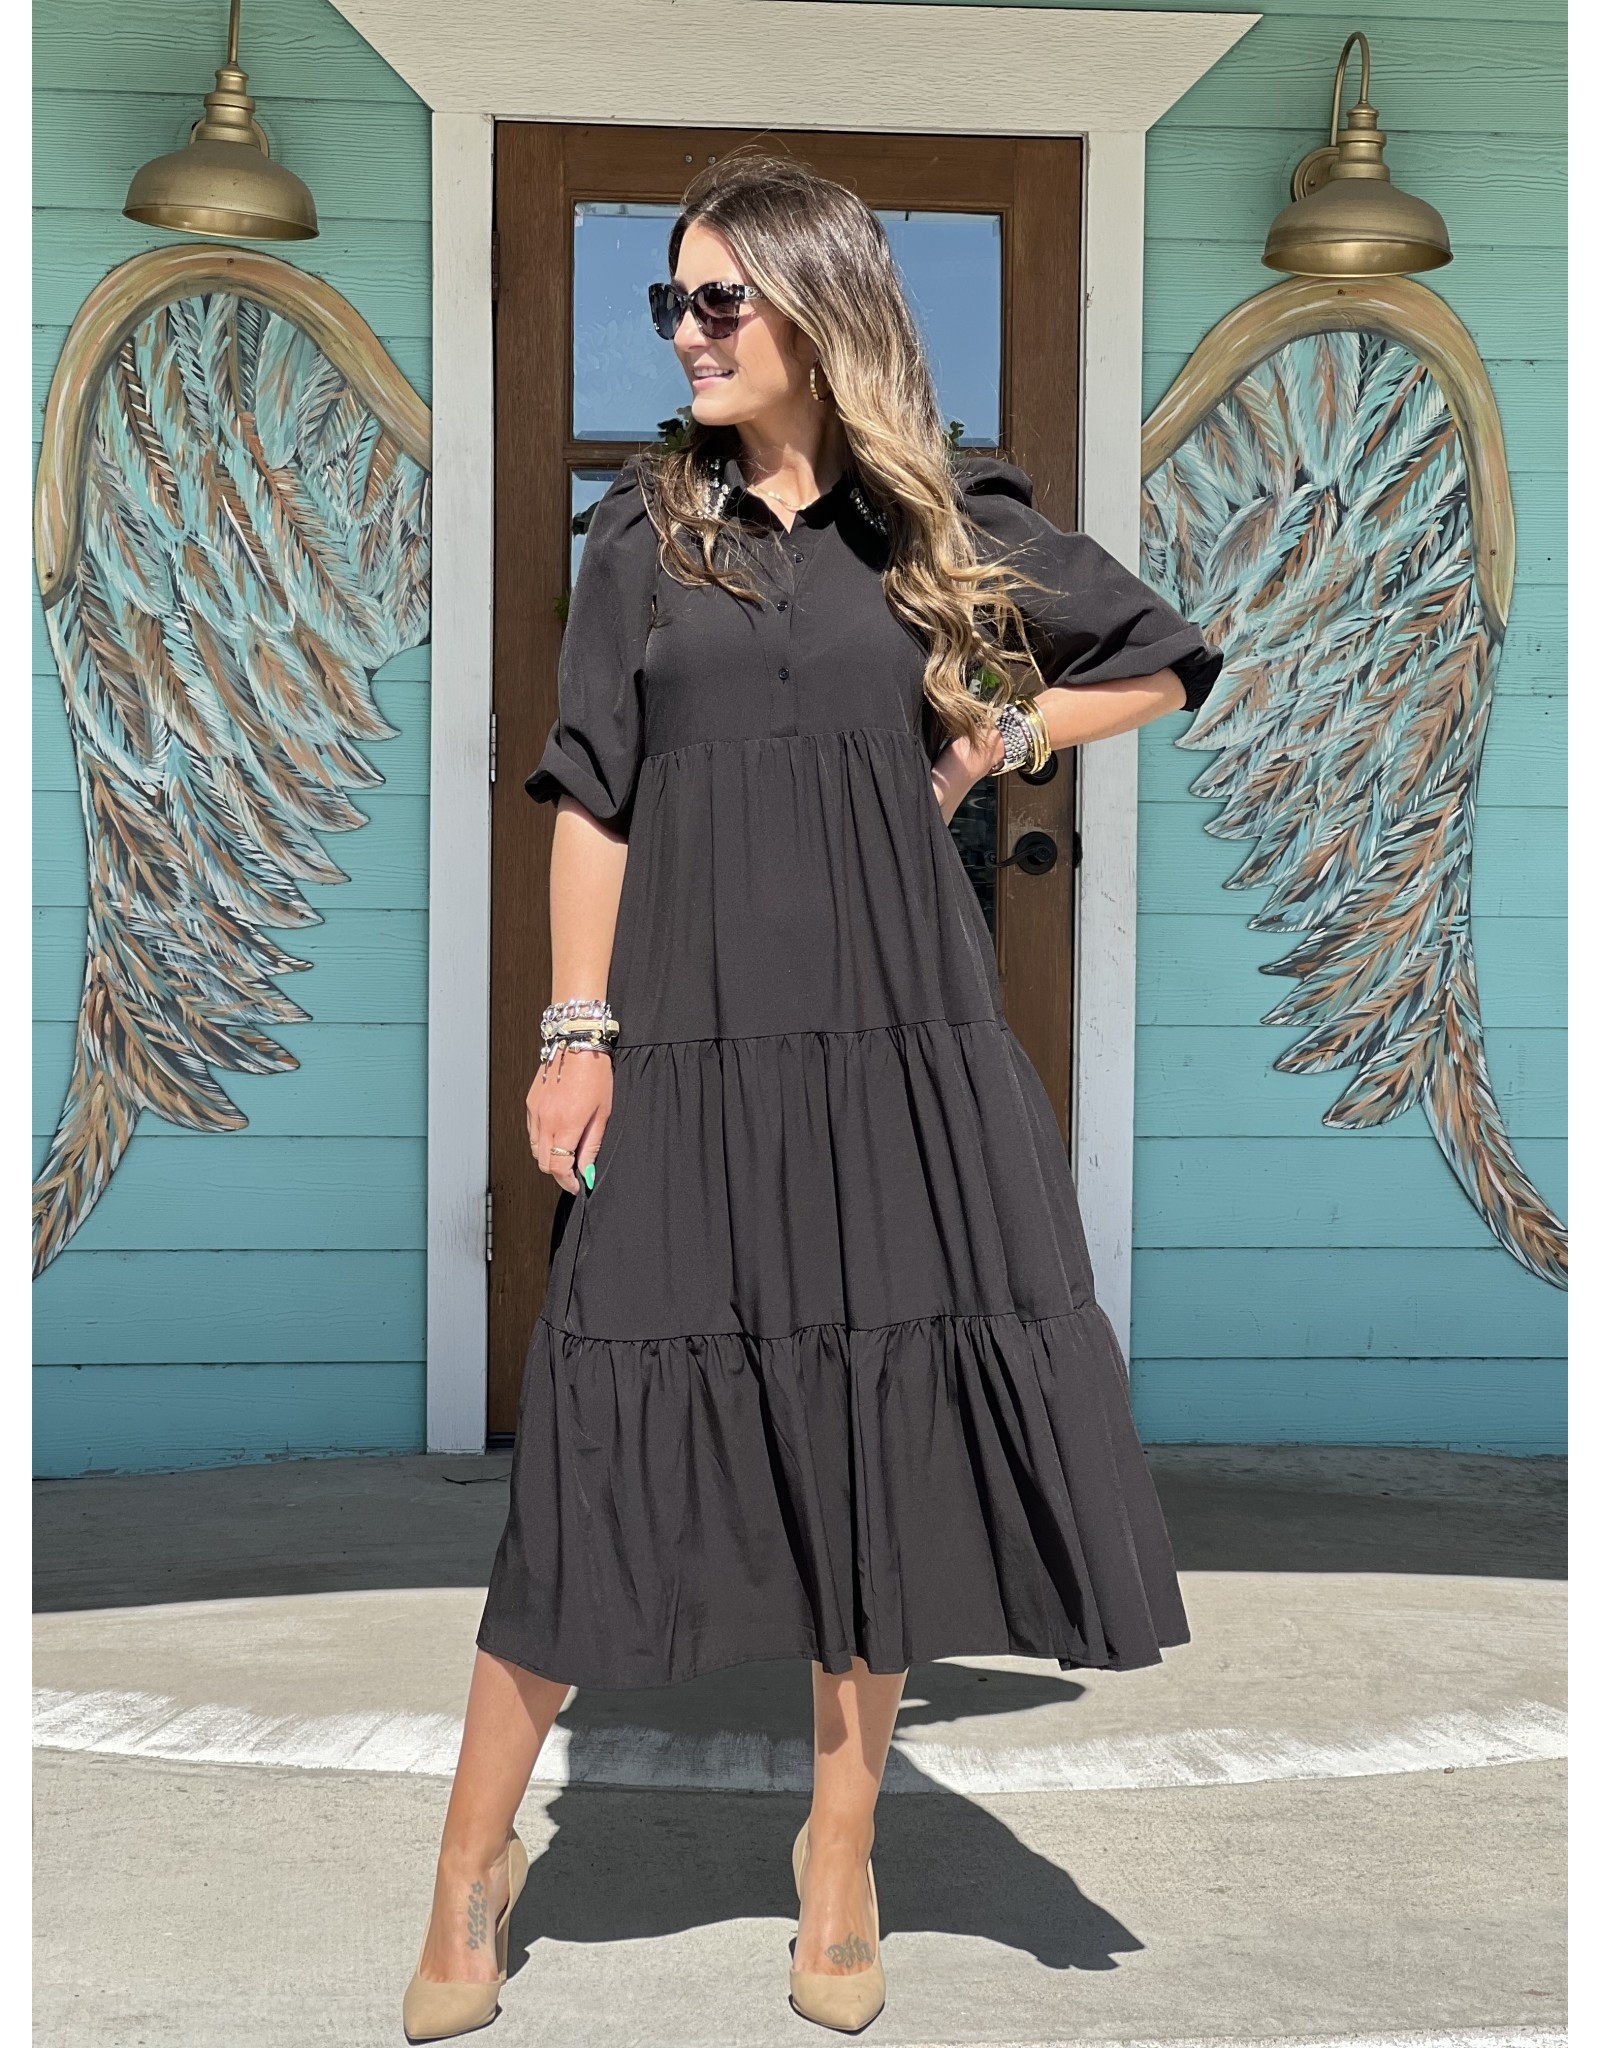 Black Rhinestone Collar Tiered Maxi Dress - Rhinestone Angel